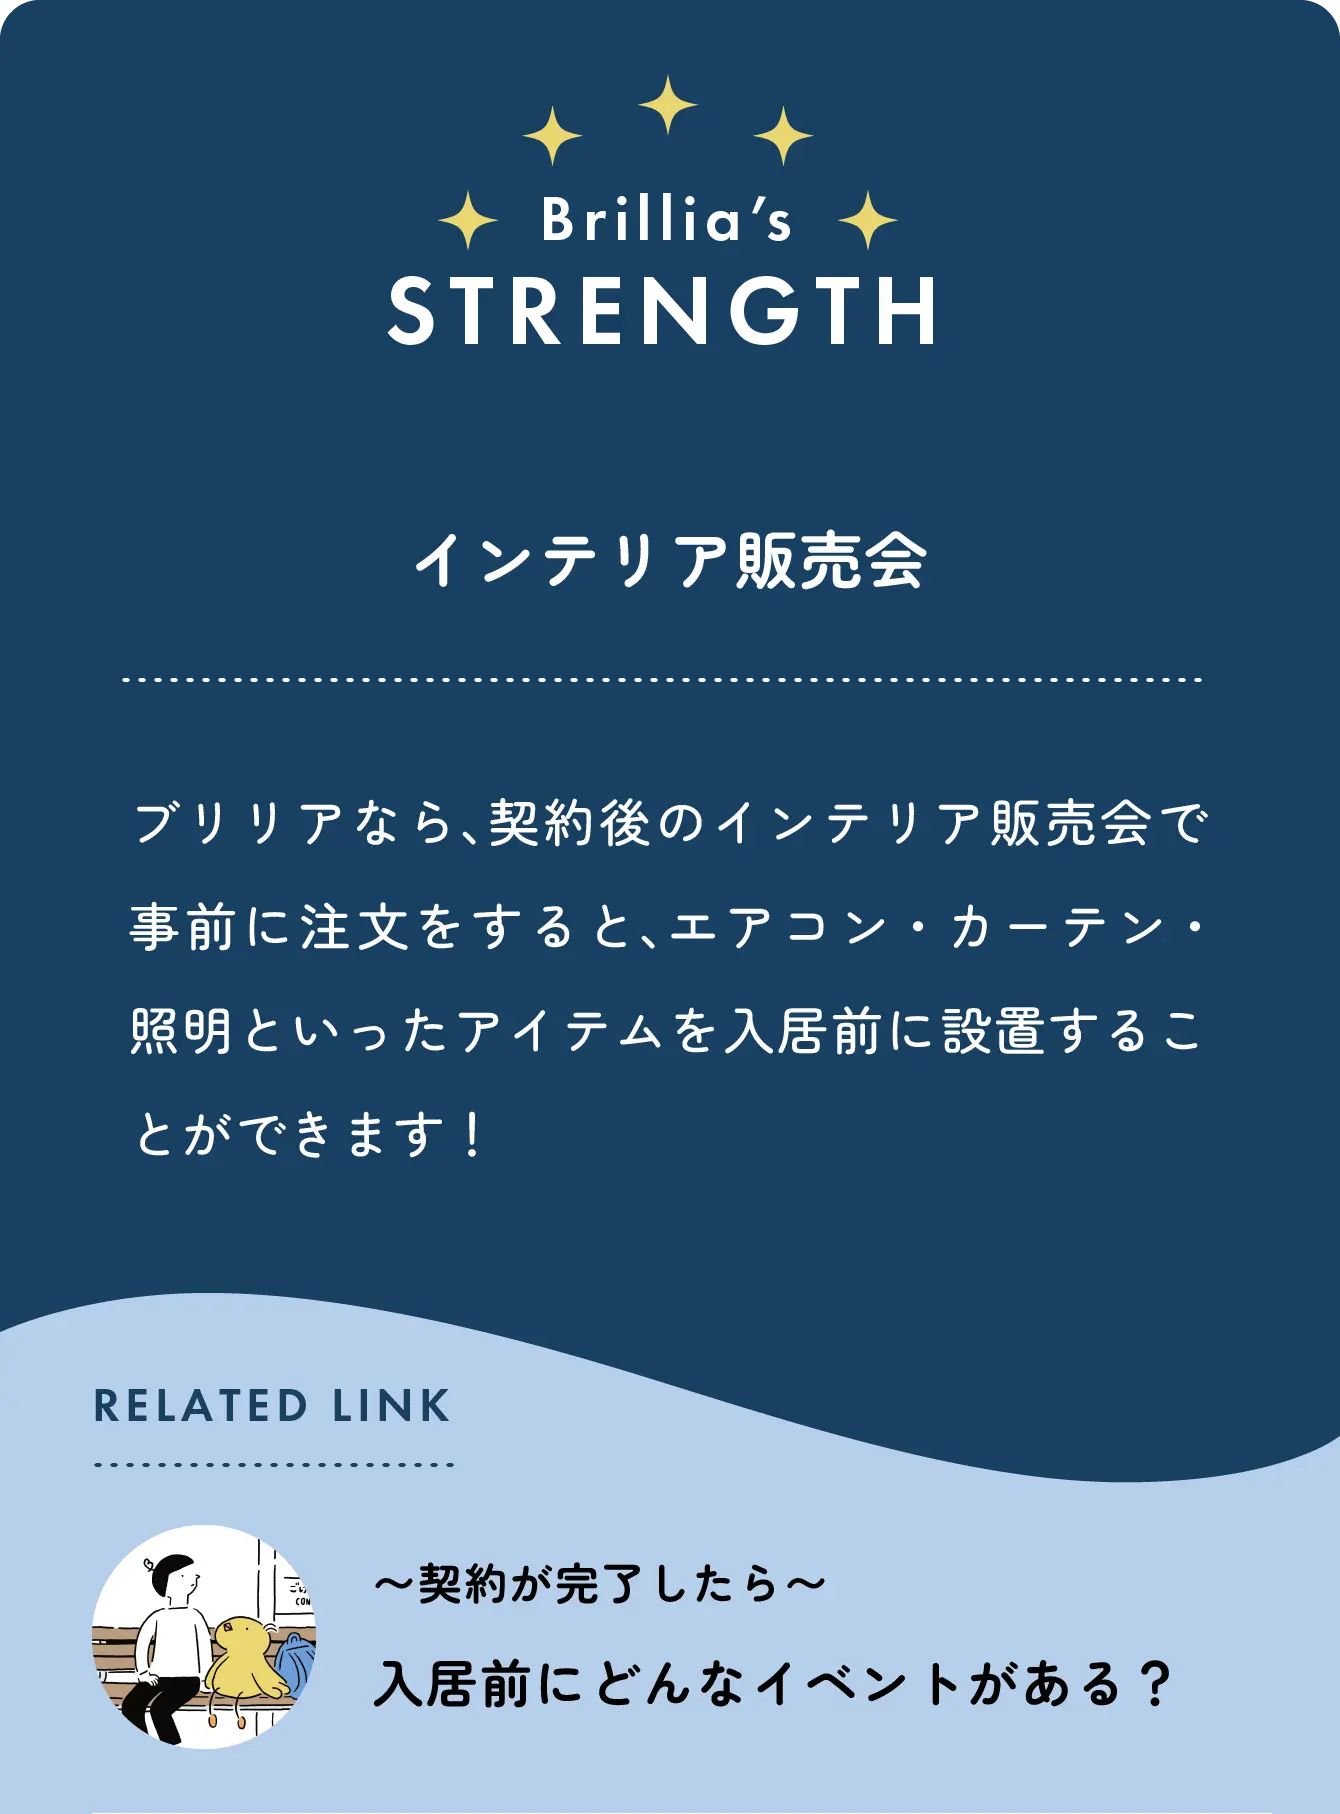 Brillia's strength インテリア販売会